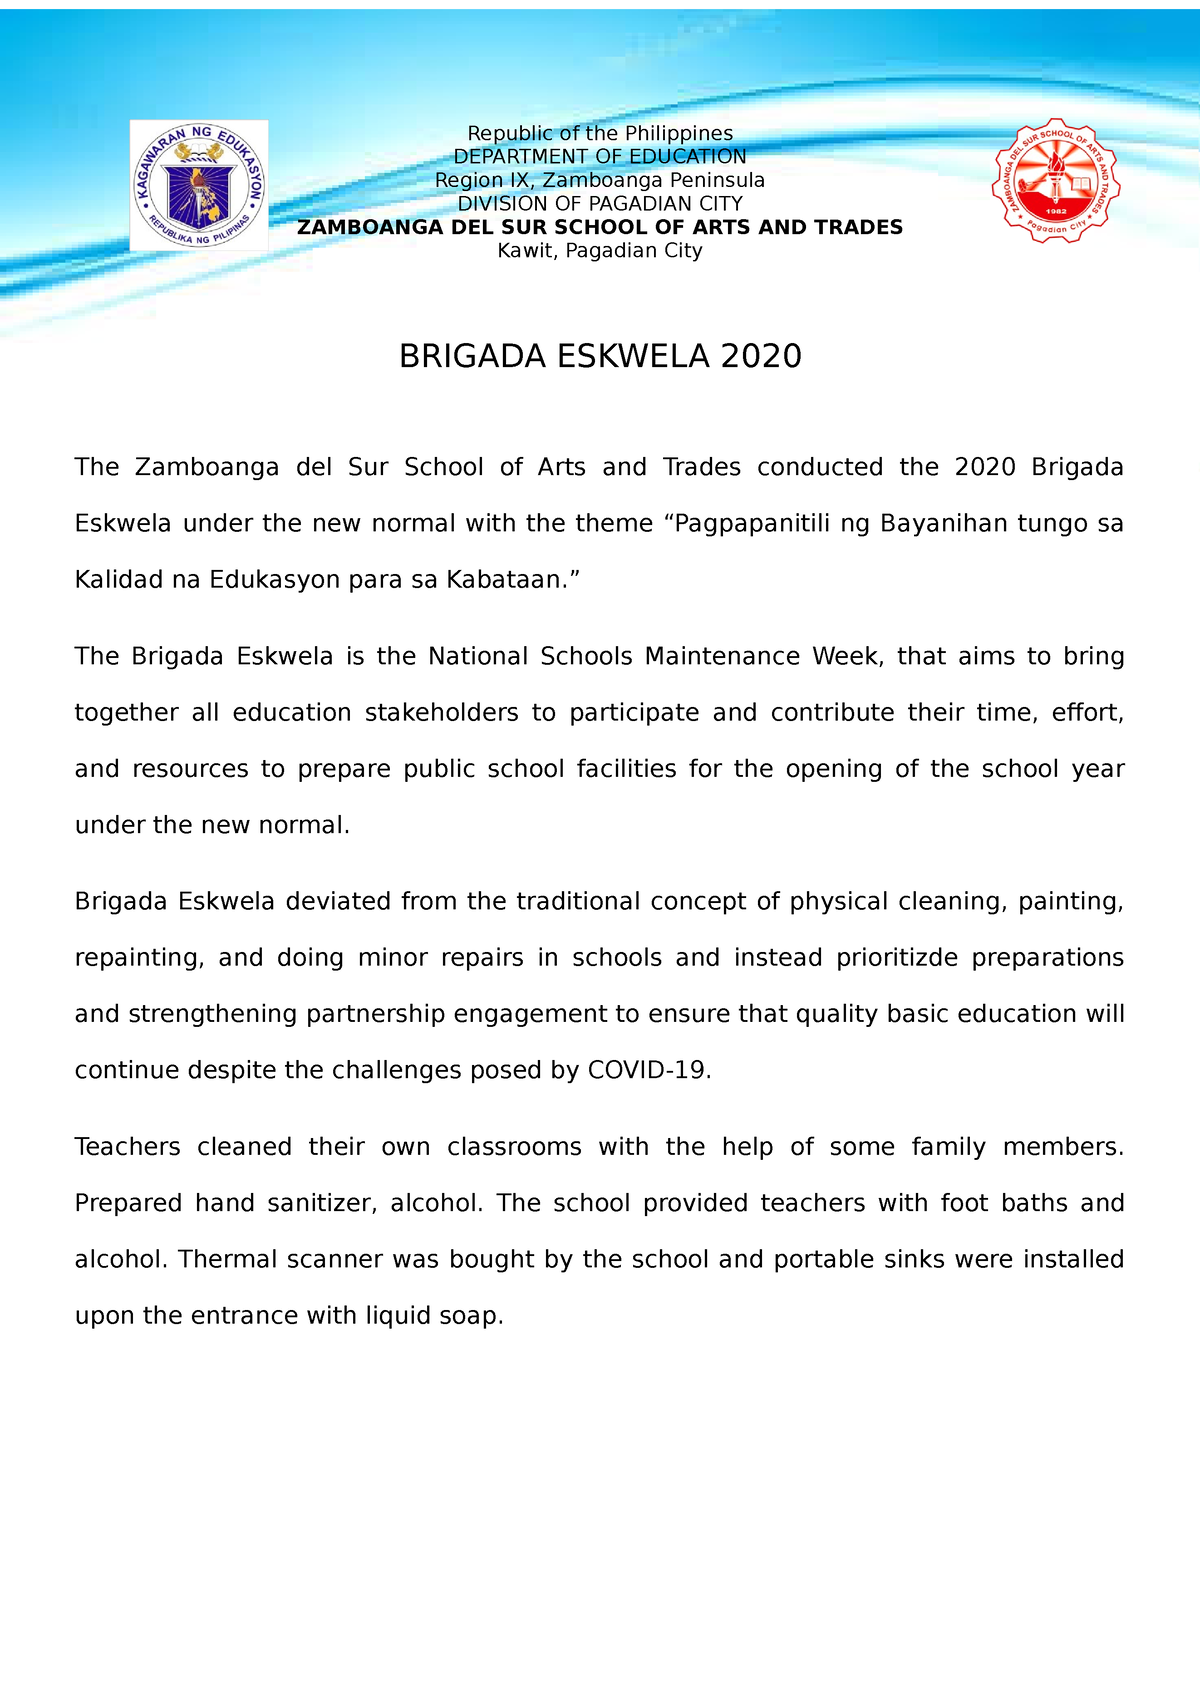 sample thesis about brigada eskwela